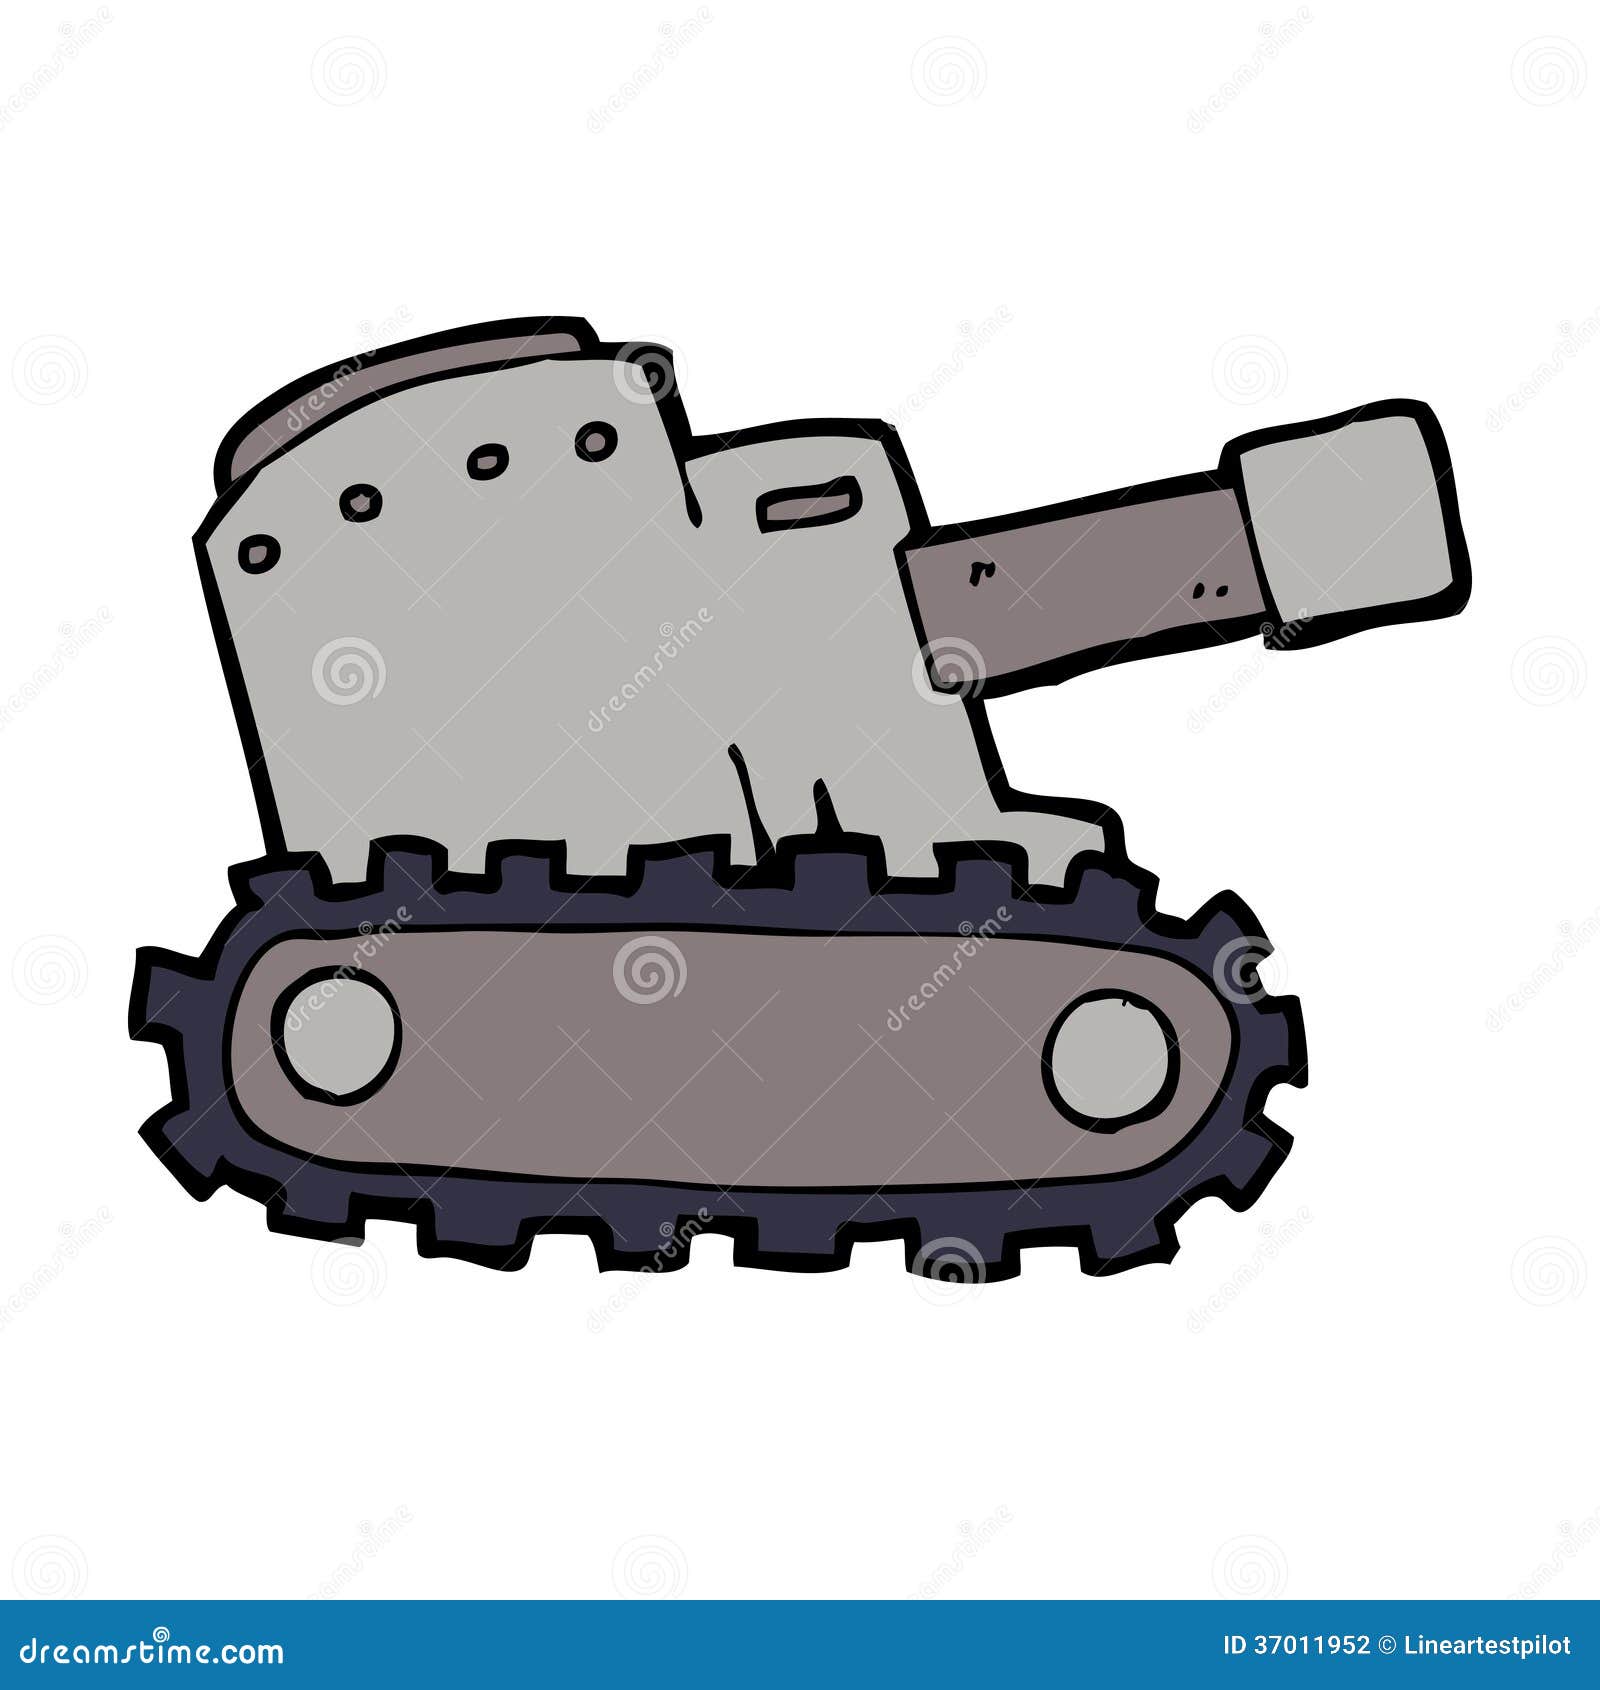 Cartoon army tank stock vector. Illustration of tank - 37011952